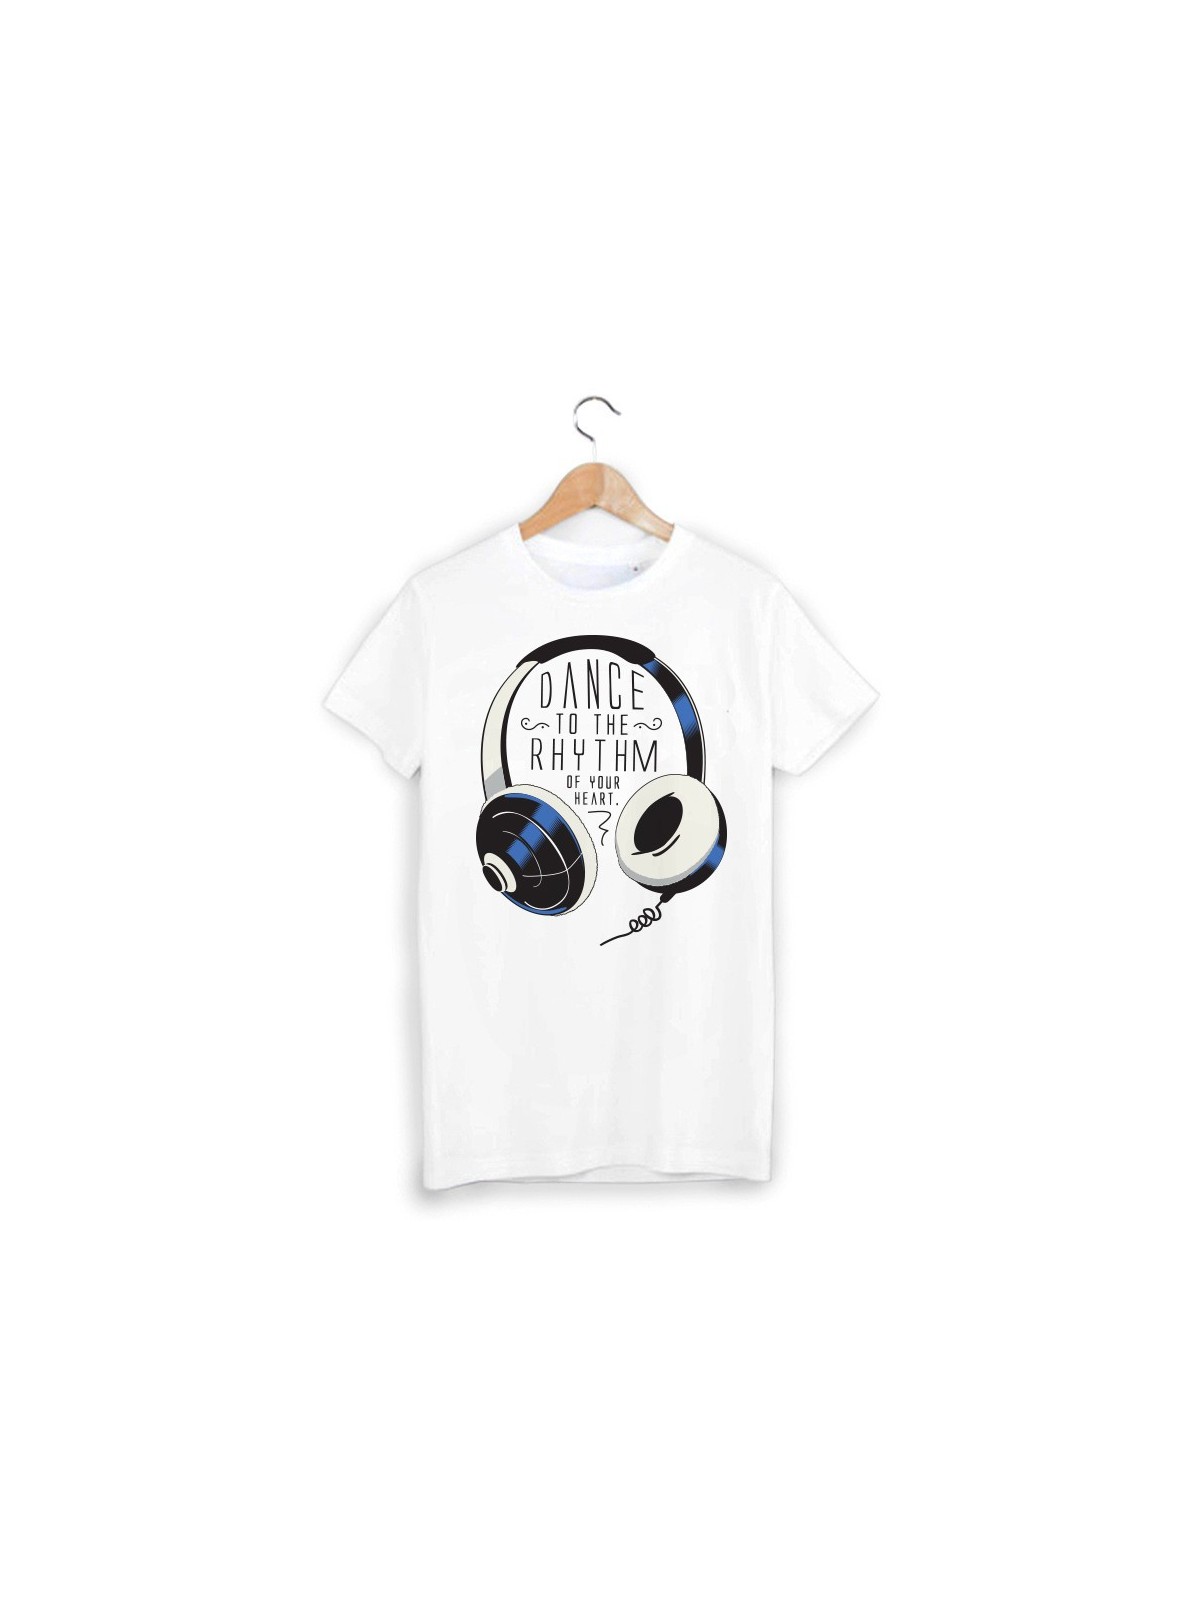 T-Shirt musique ref 1425